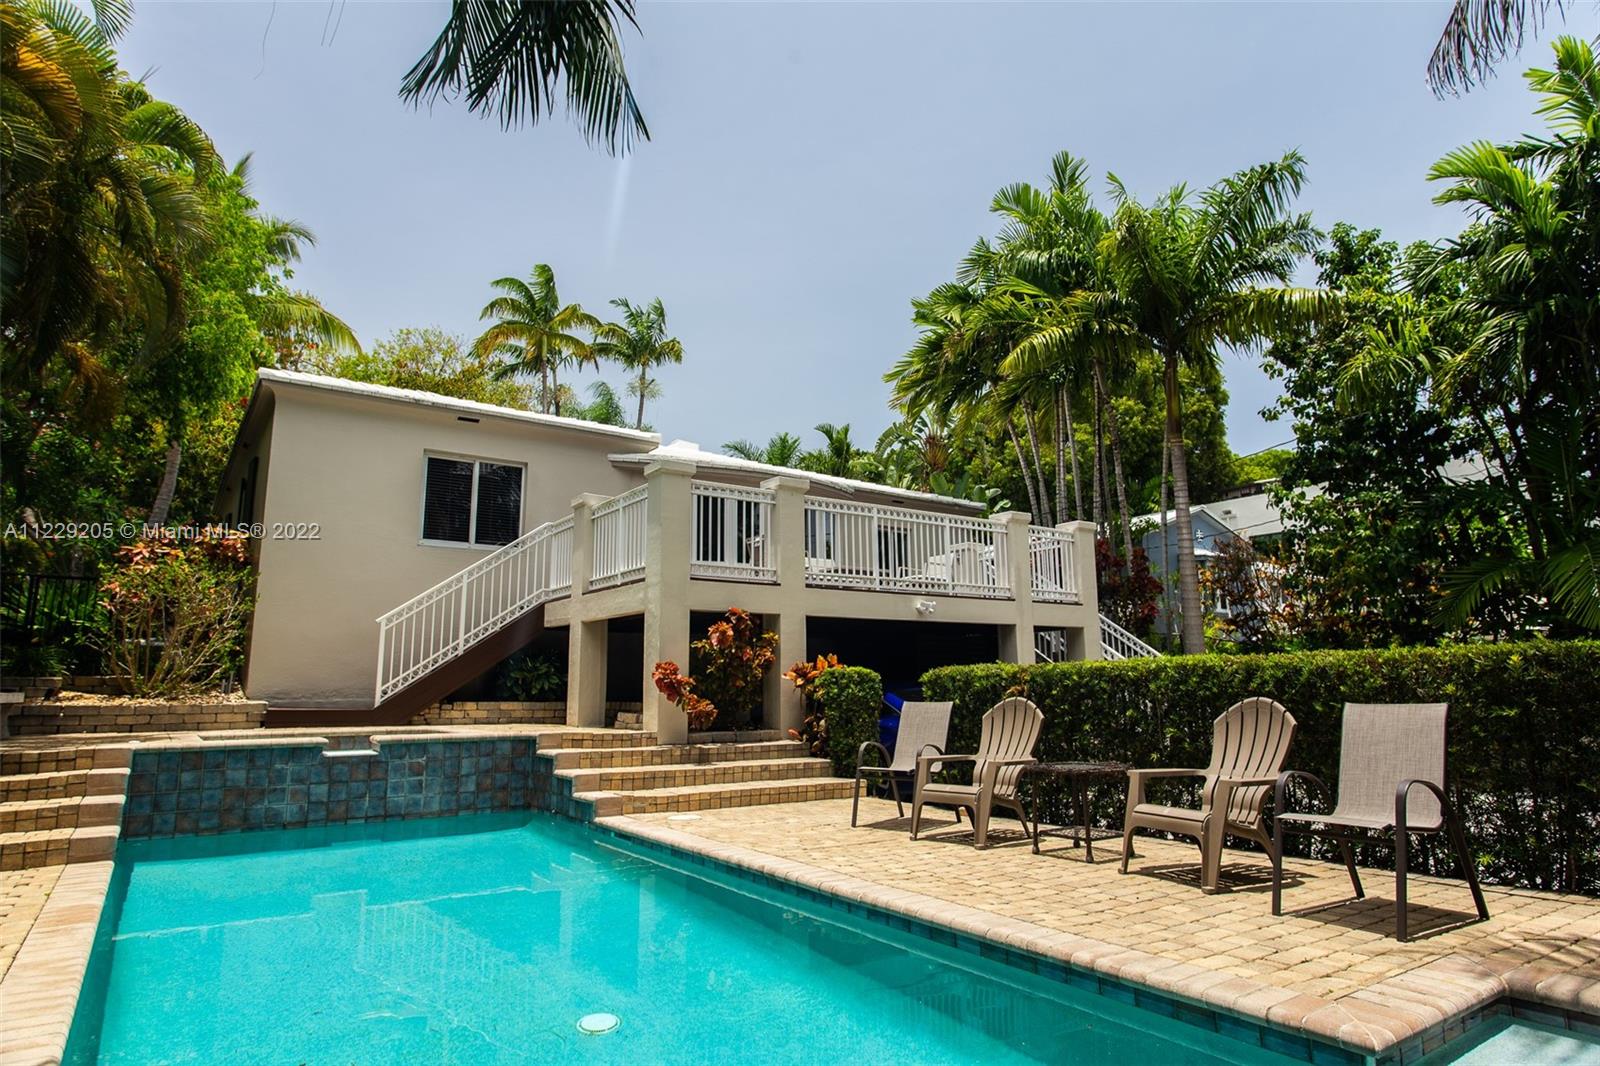 Rental Property at 514 N Victoria Park Rd, Fort Lauderdale, Broward County, Florida - Bedrooms: 3 
Bathrooms: 3  - $6,200 MO.